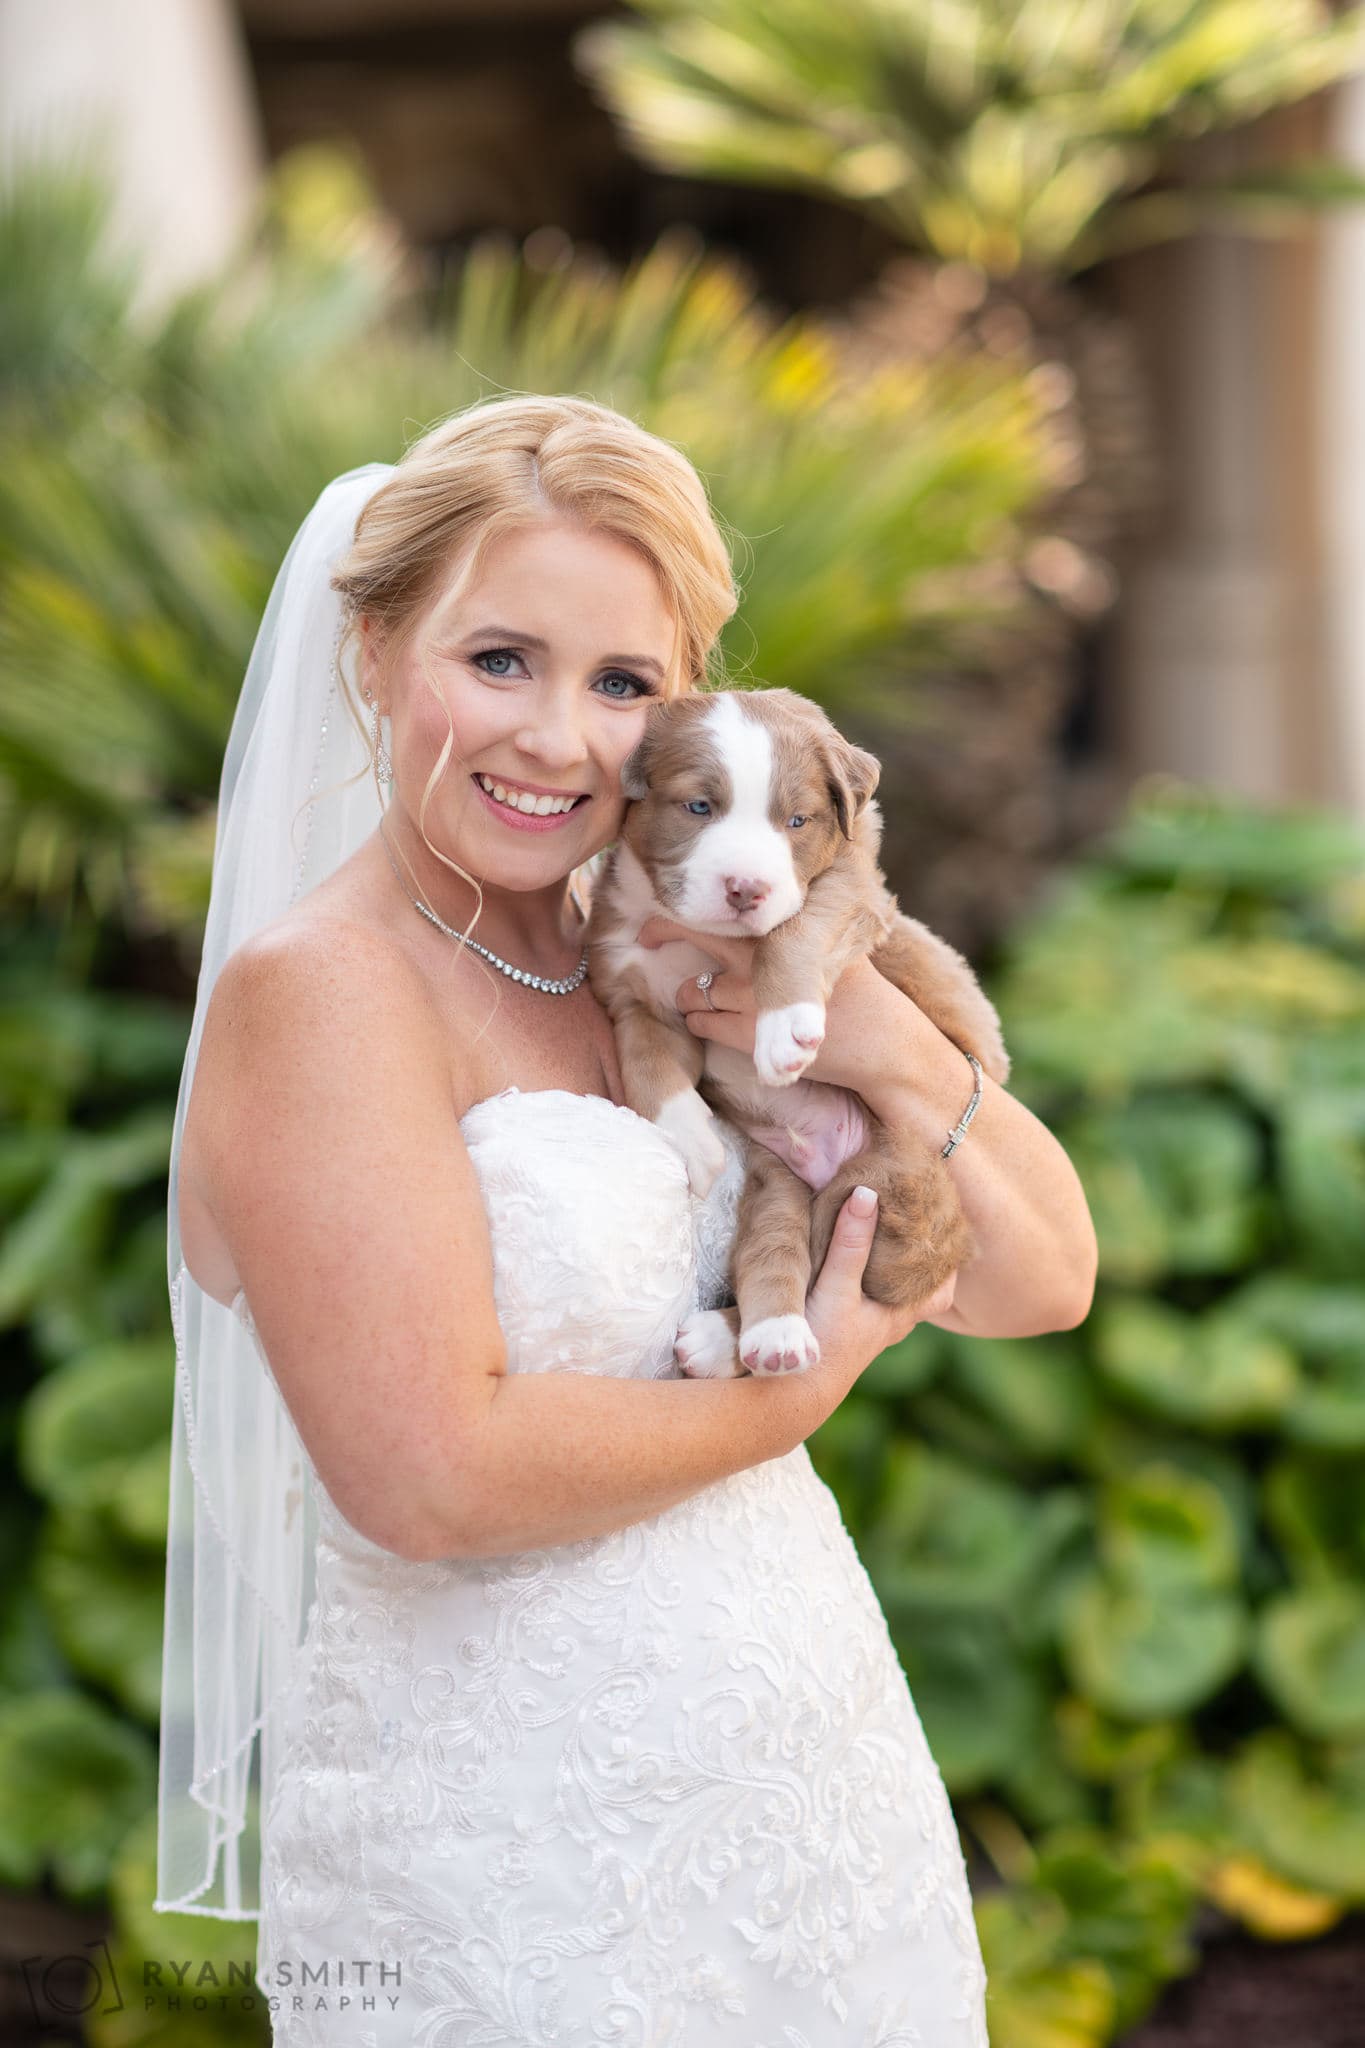 Bride holding cutest puppy - 21 Main Events - North Myrtle Beach